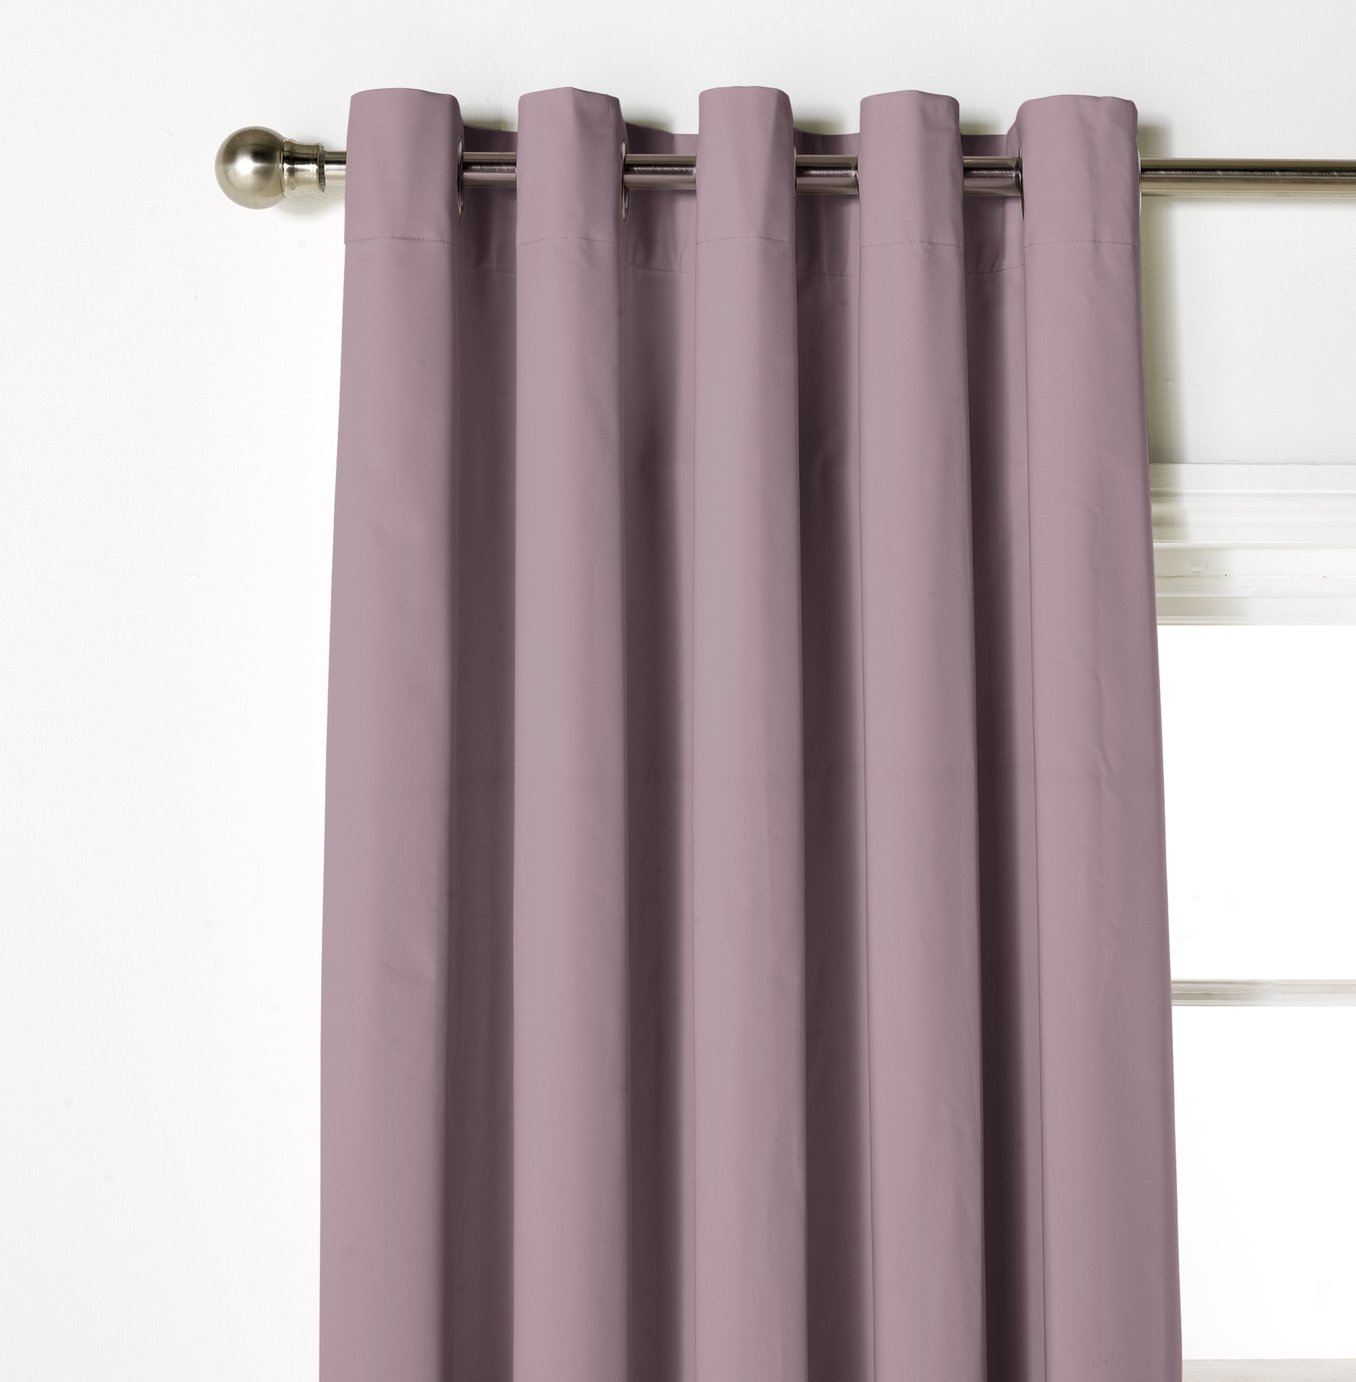 ColourMatch Thermal Blackout Curtains - 117x183cm - Blush